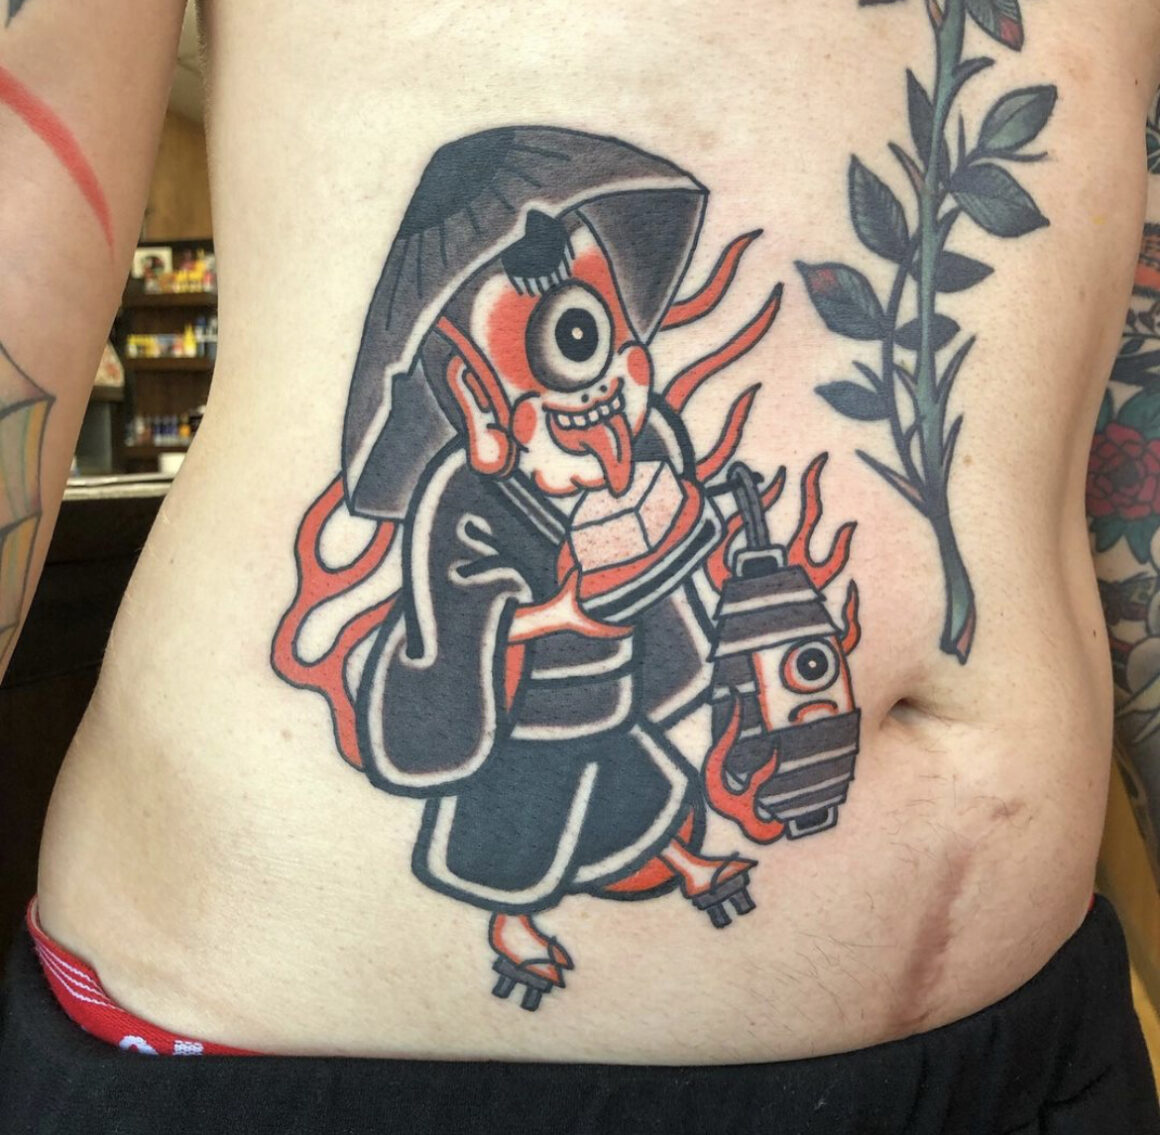 Yokai tattoo meaning